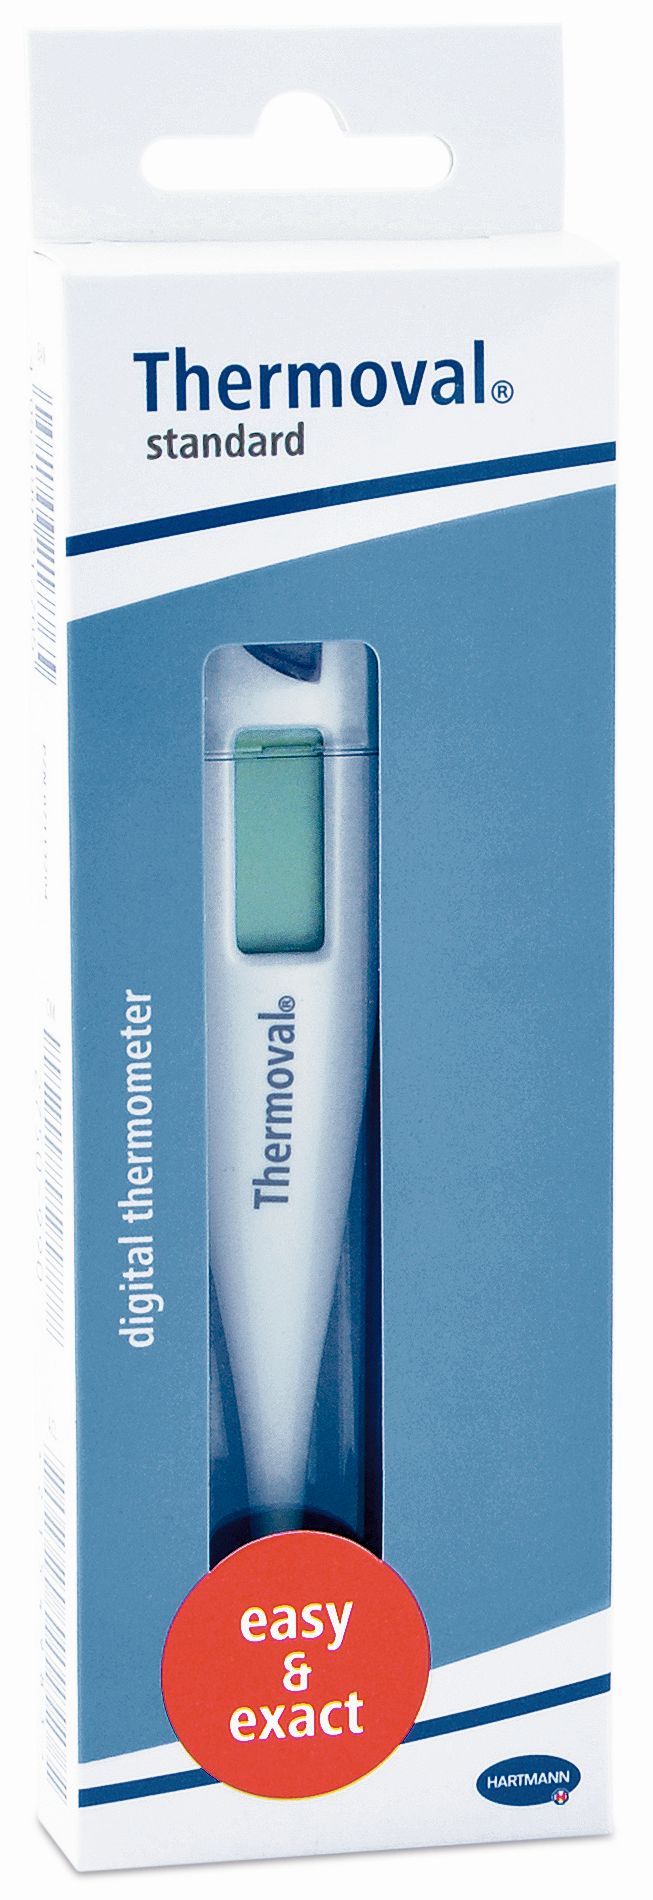 Termometre - Termometru digital Thermoval Standard, Hartmann